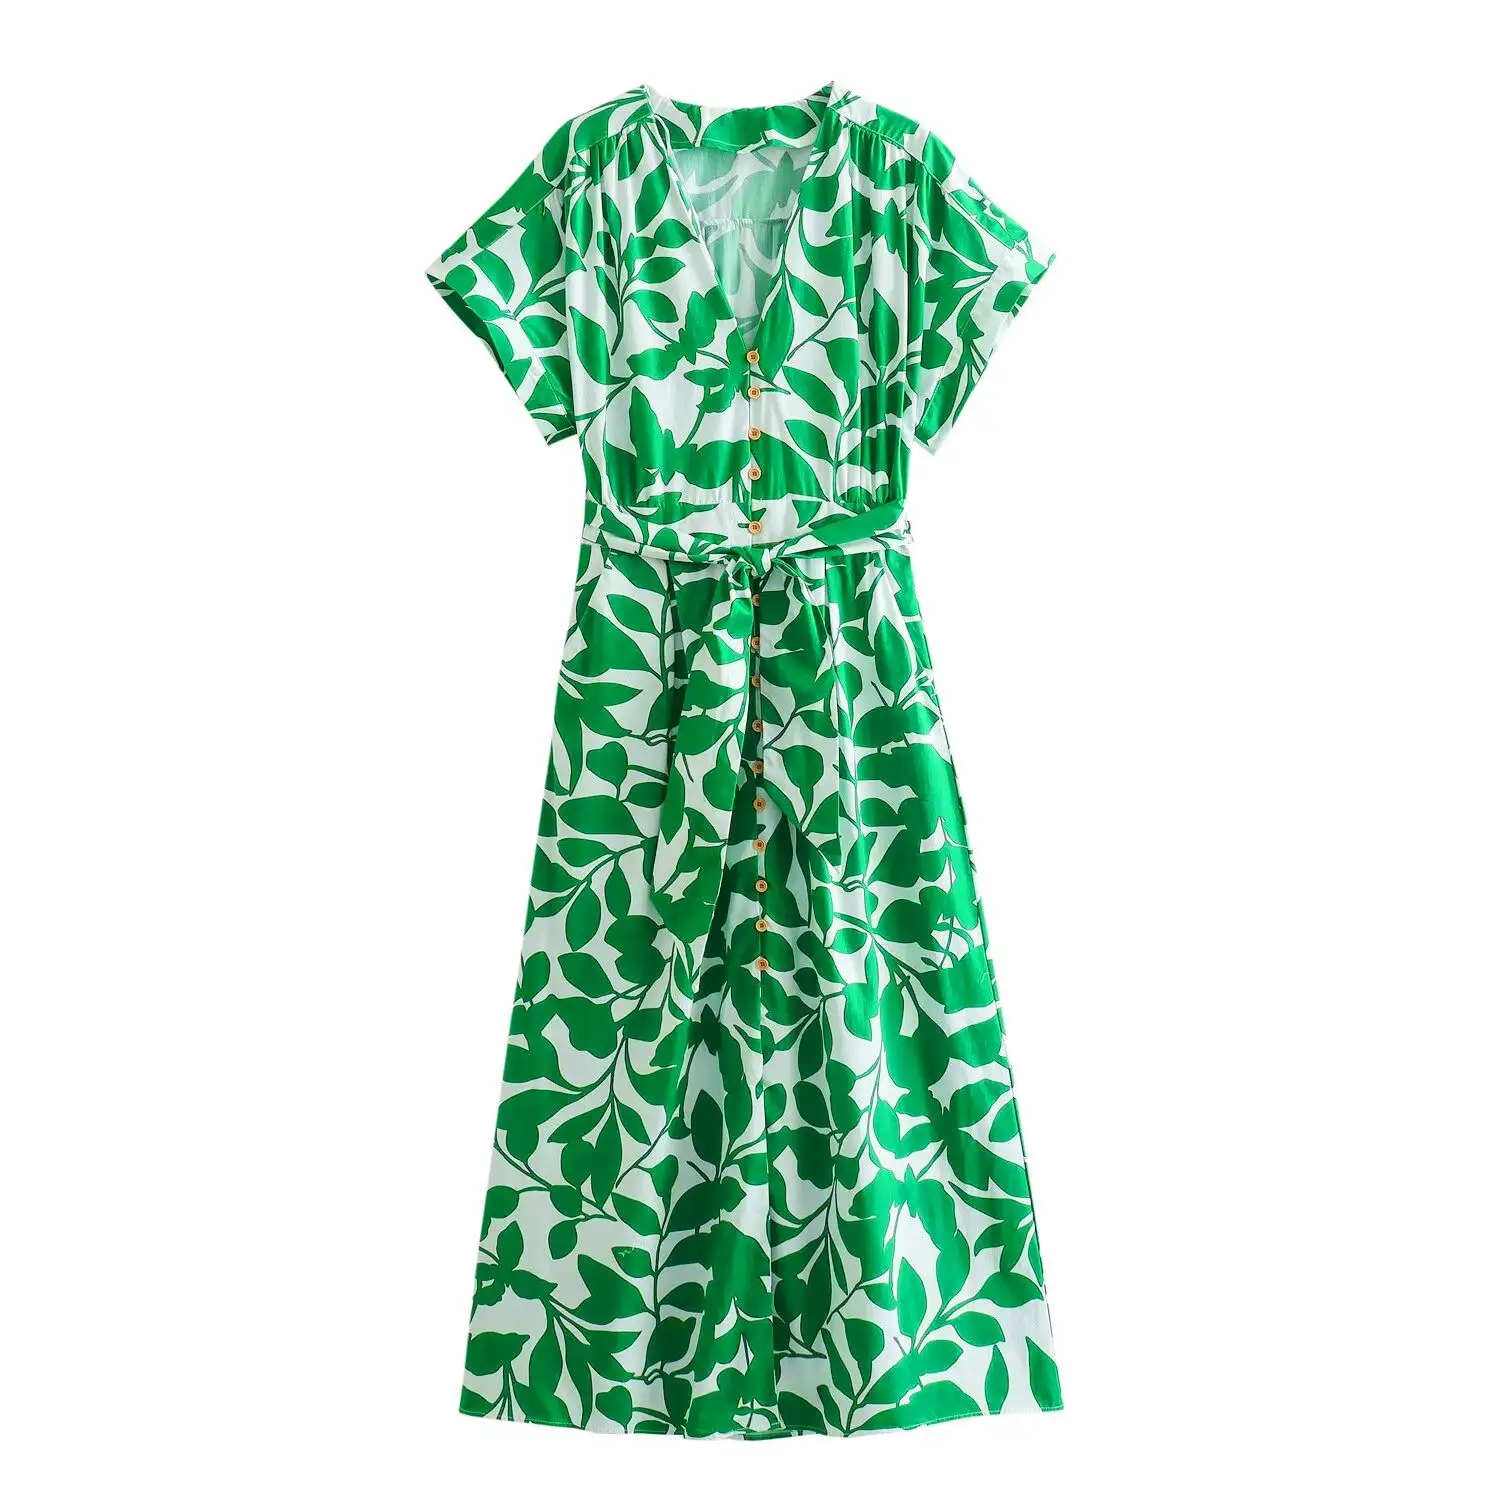 Dress panjang kasual wanita, Gaun panjang motif bunga warna hijau leher V lengan pendek